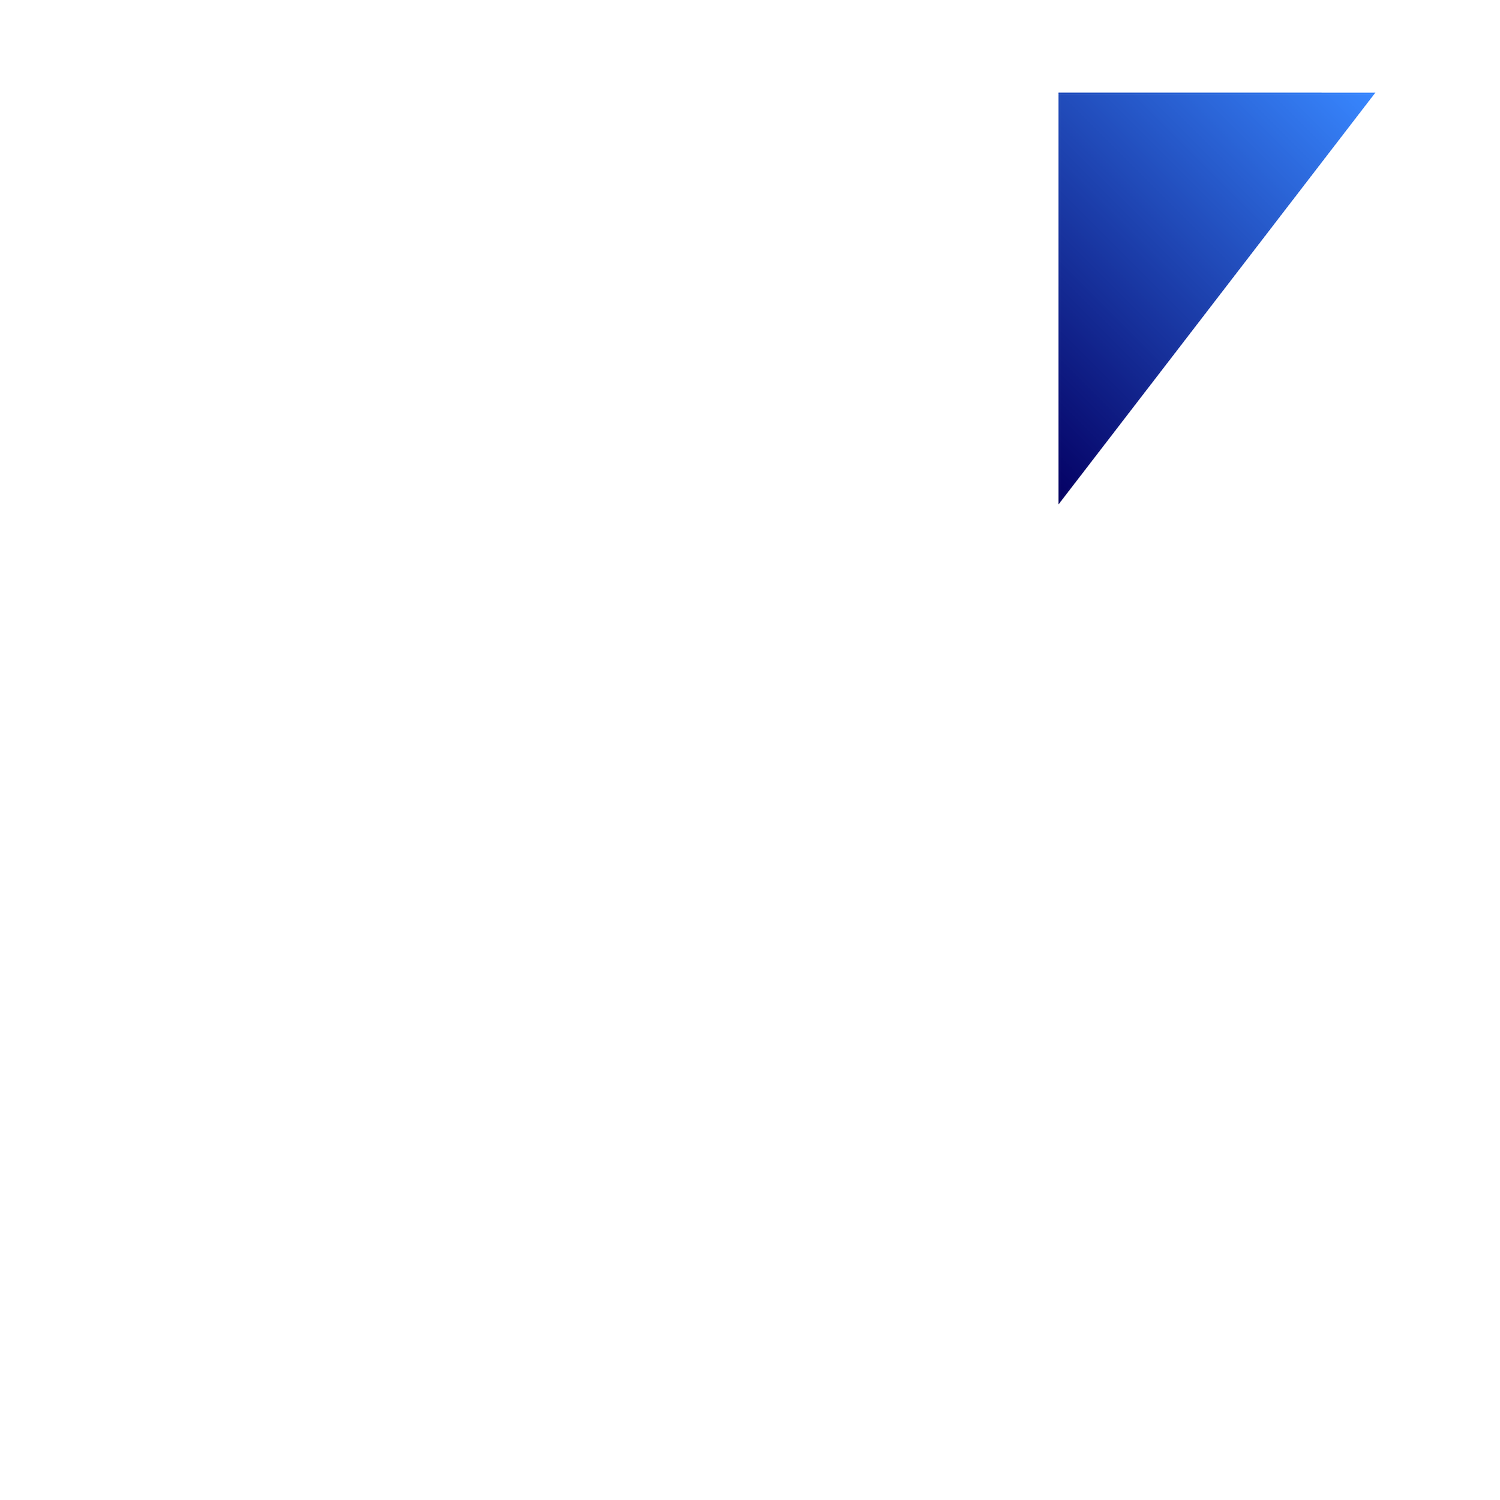 MI Studios